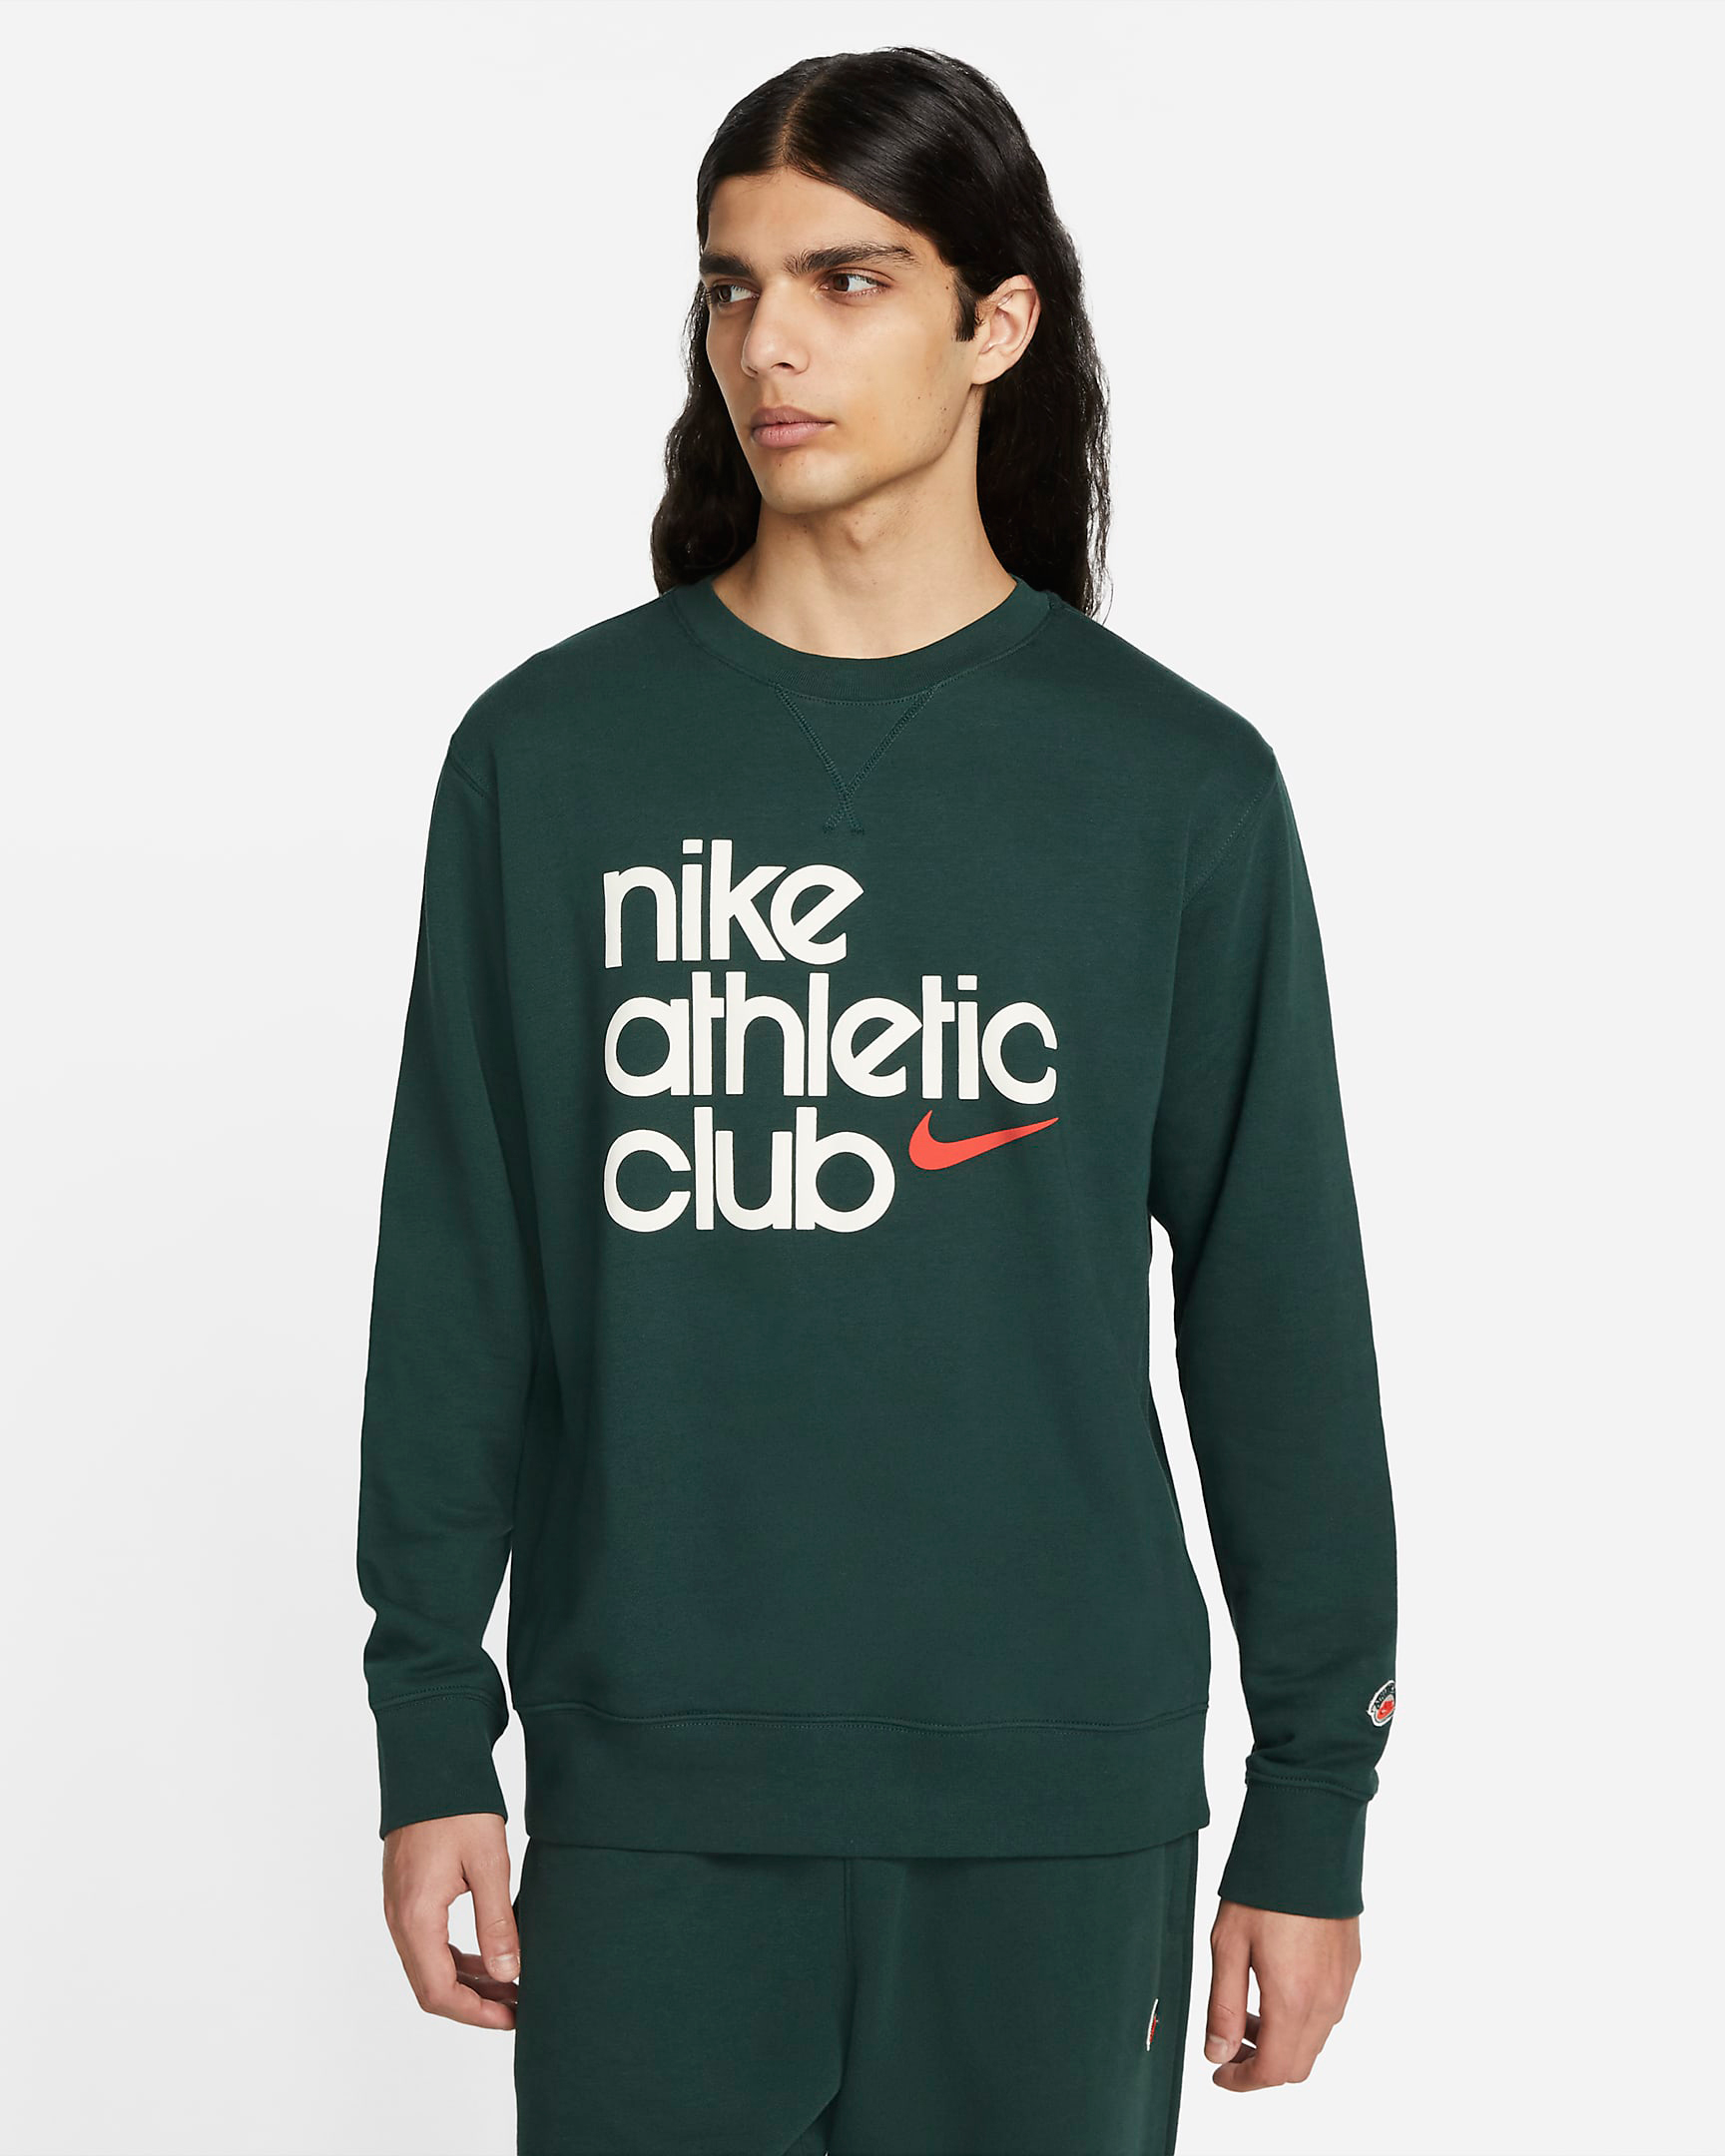 nike-athletic-club-sweatshirt-pro-green